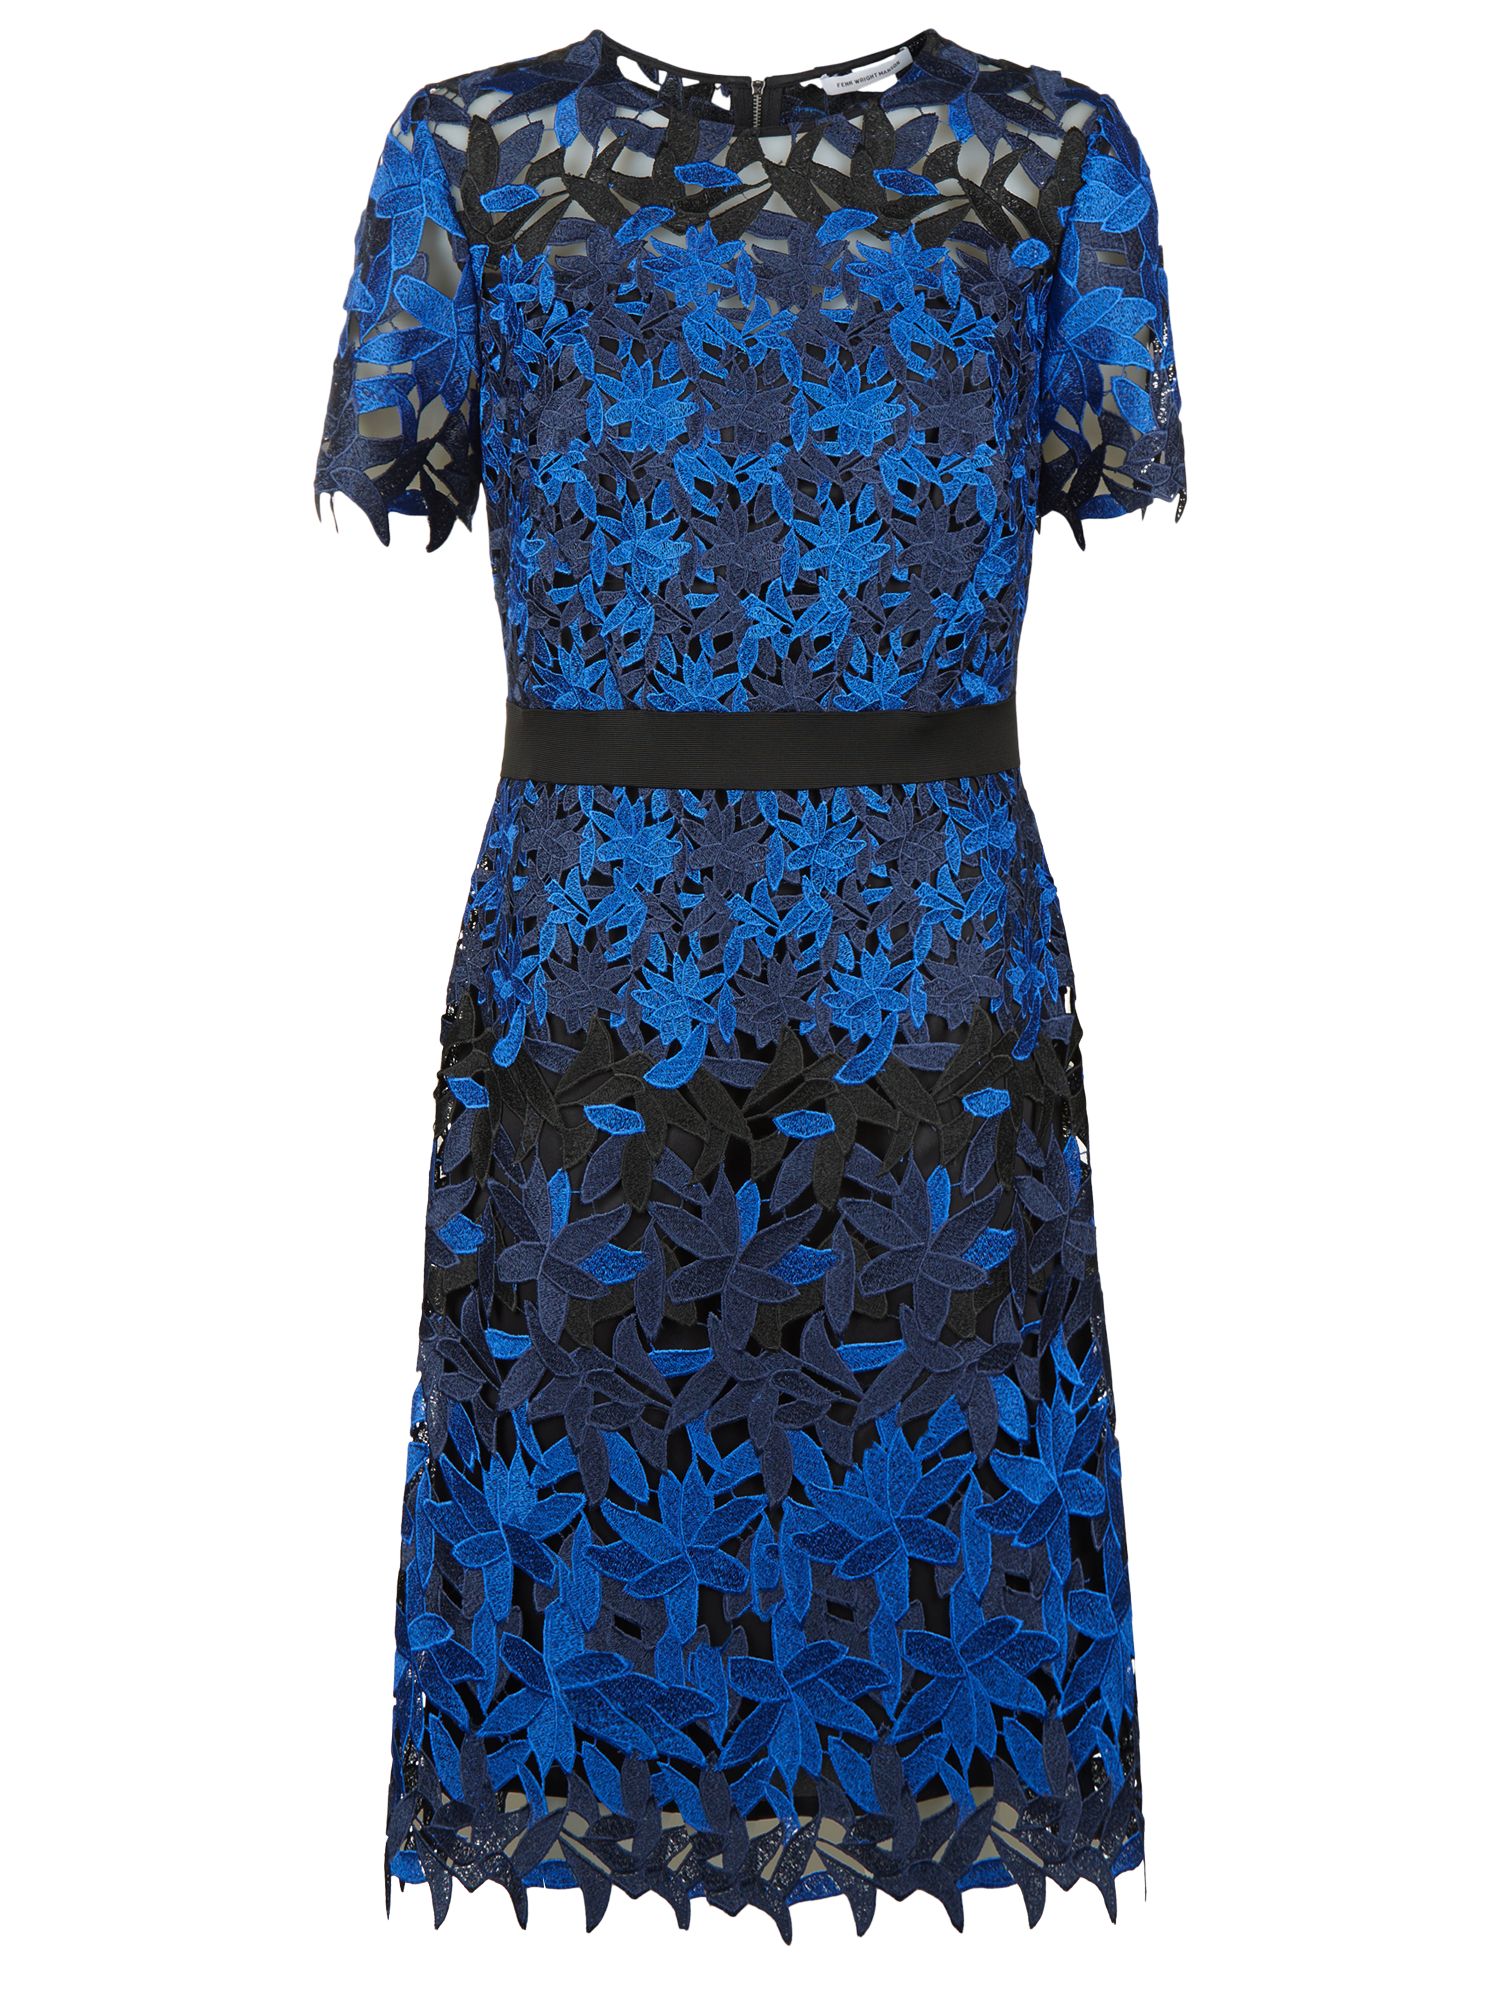 Fenn Wright Manson Petite Planet Dress, Black/Blue at John Lewis & Partners